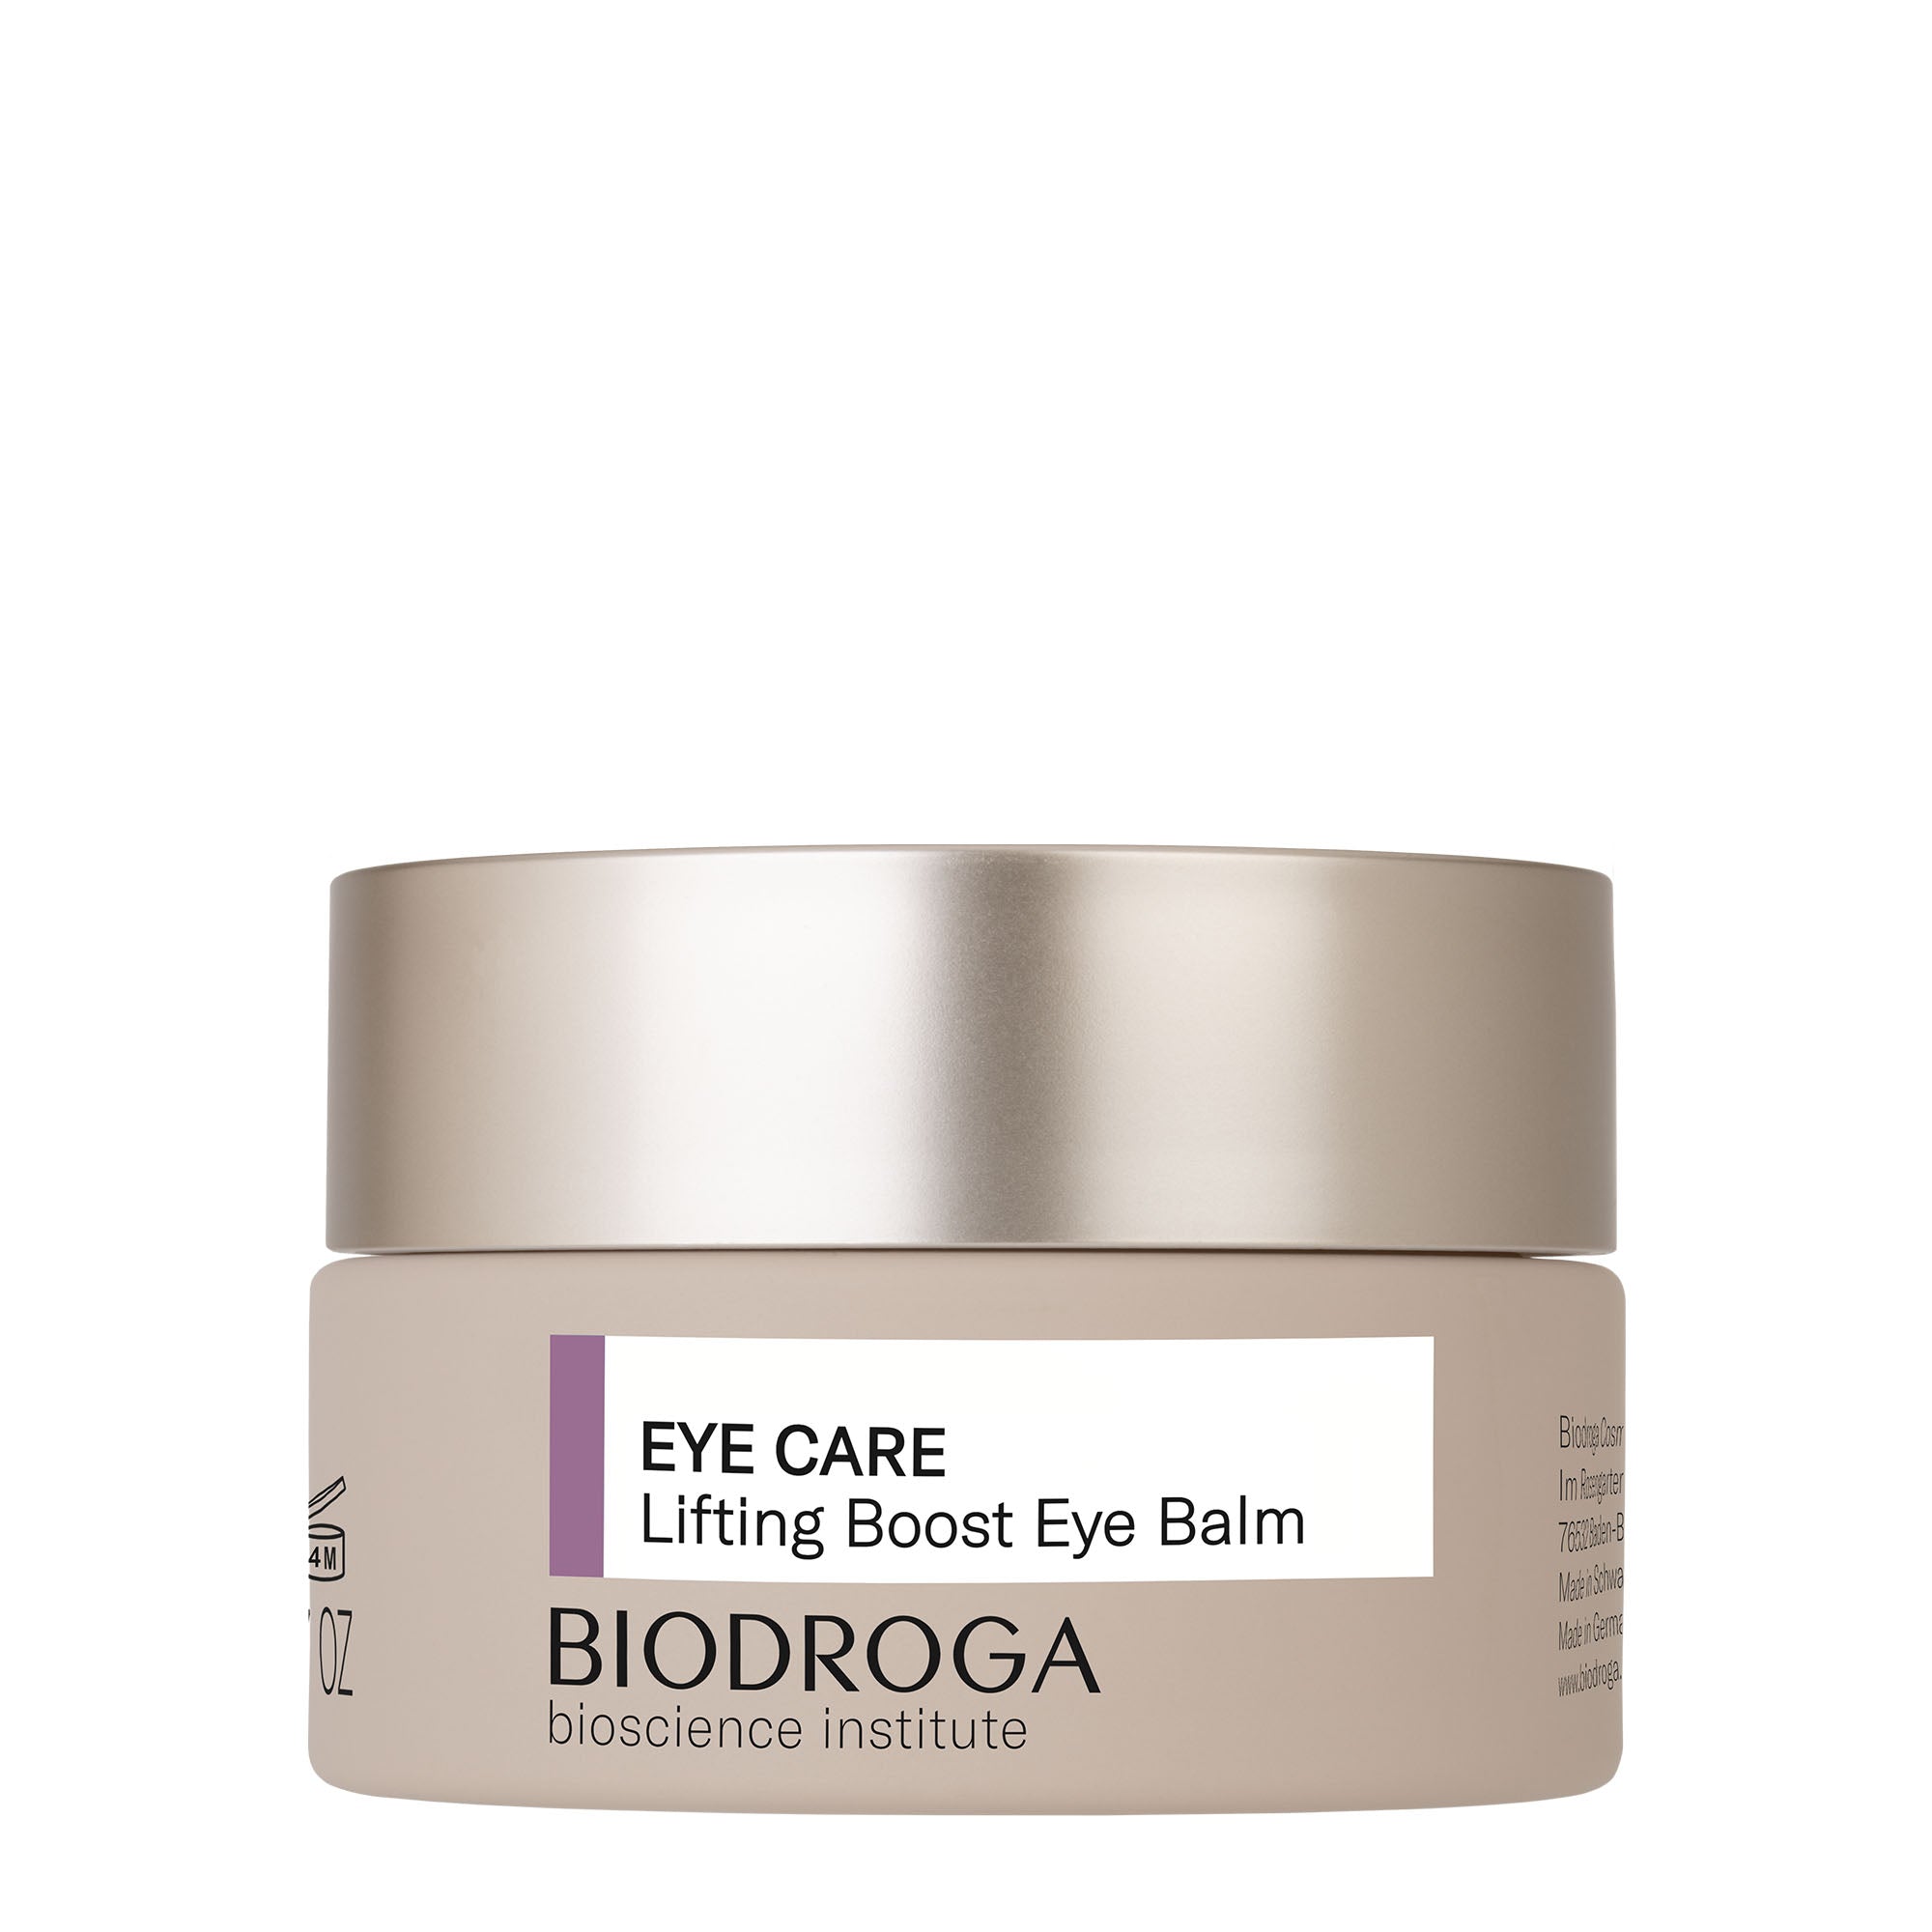 EYE CARE Lifting Boost Eye Balm - BIODROGA - True Beauty Skin & Body Care - BIODROGA Australia